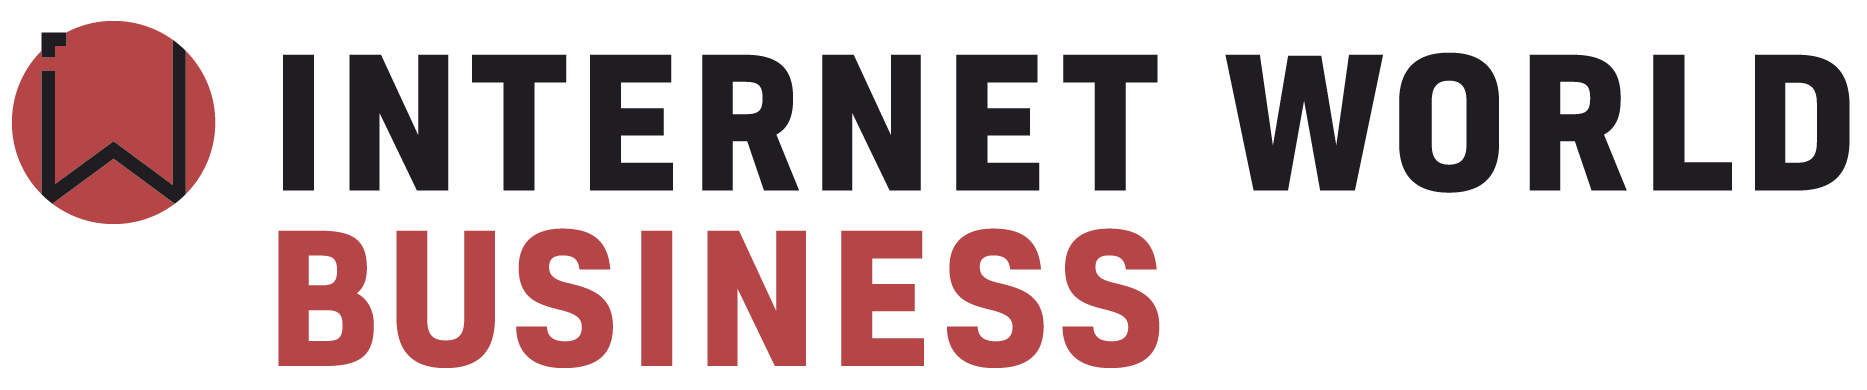 internetworldbusiness_logo